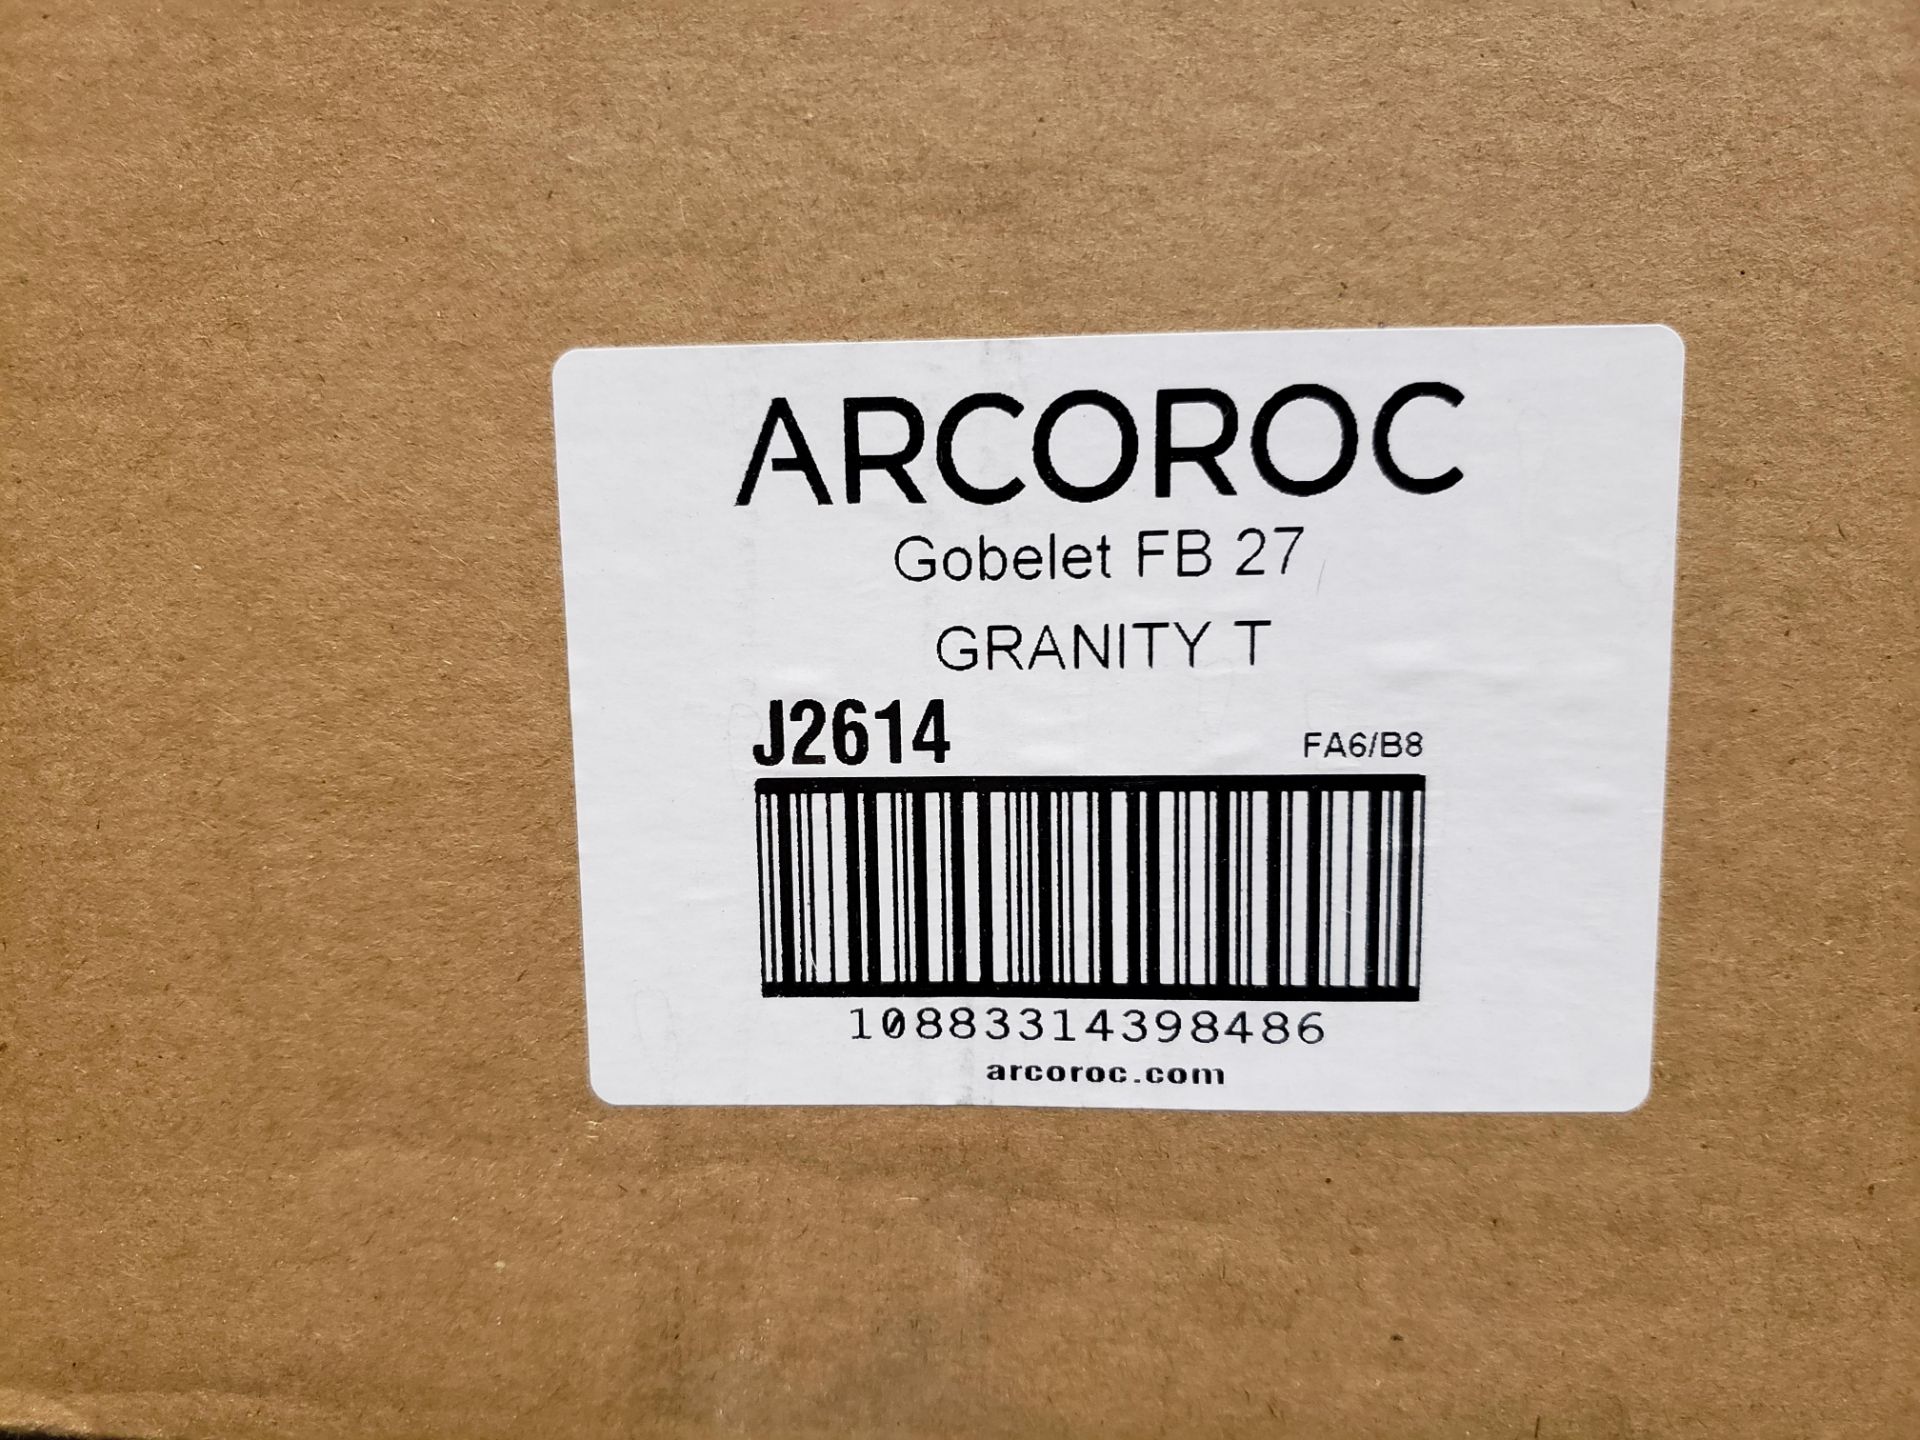 Arcoroc Granity 9 oz Tempered Rocks Glasses - 46 Glasses - Image 2 of 3